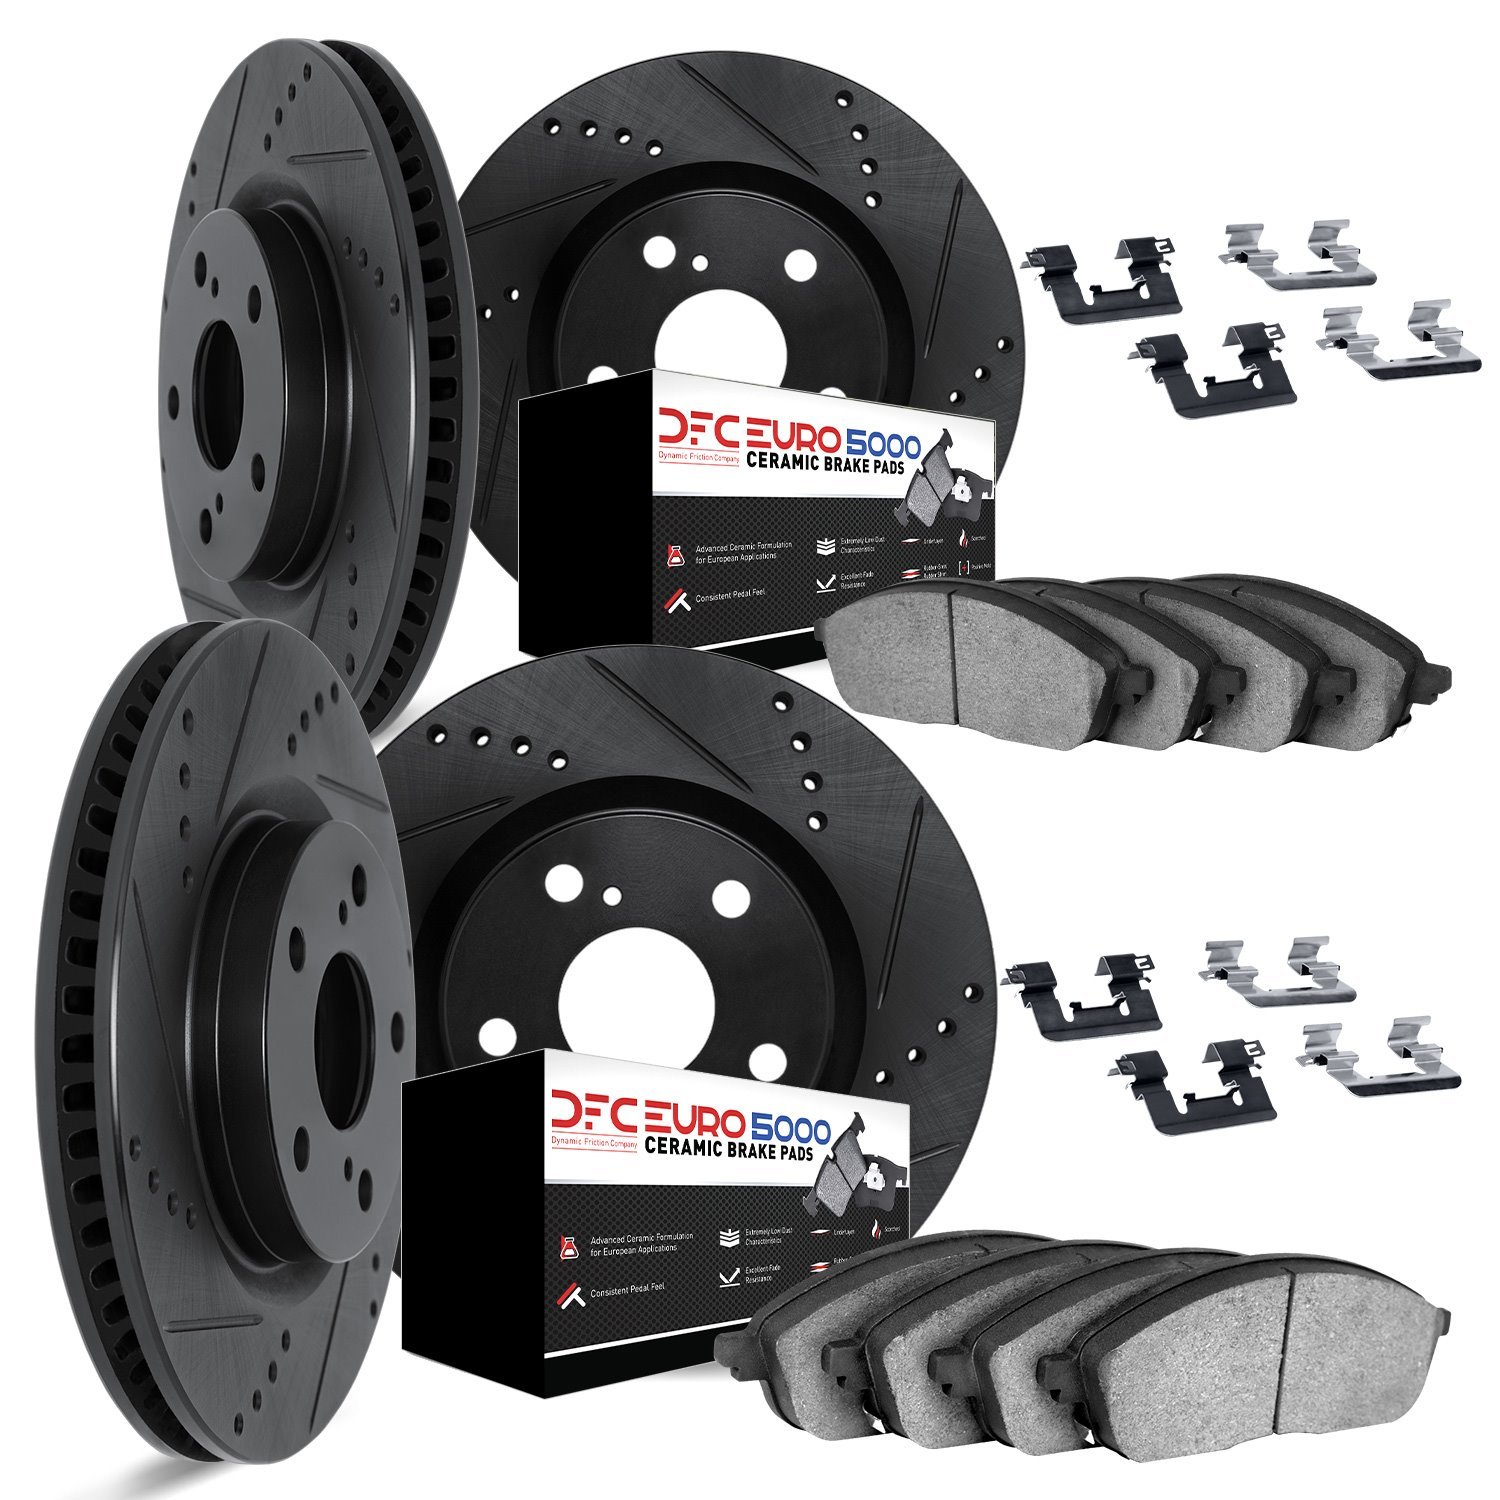 8614-31038 Drilled/Slotted Brake Rotors w/5000 Euro Ceramic Brake Pads Kit & Hardware [Black], 2011-2018 BMW, Position: Front an